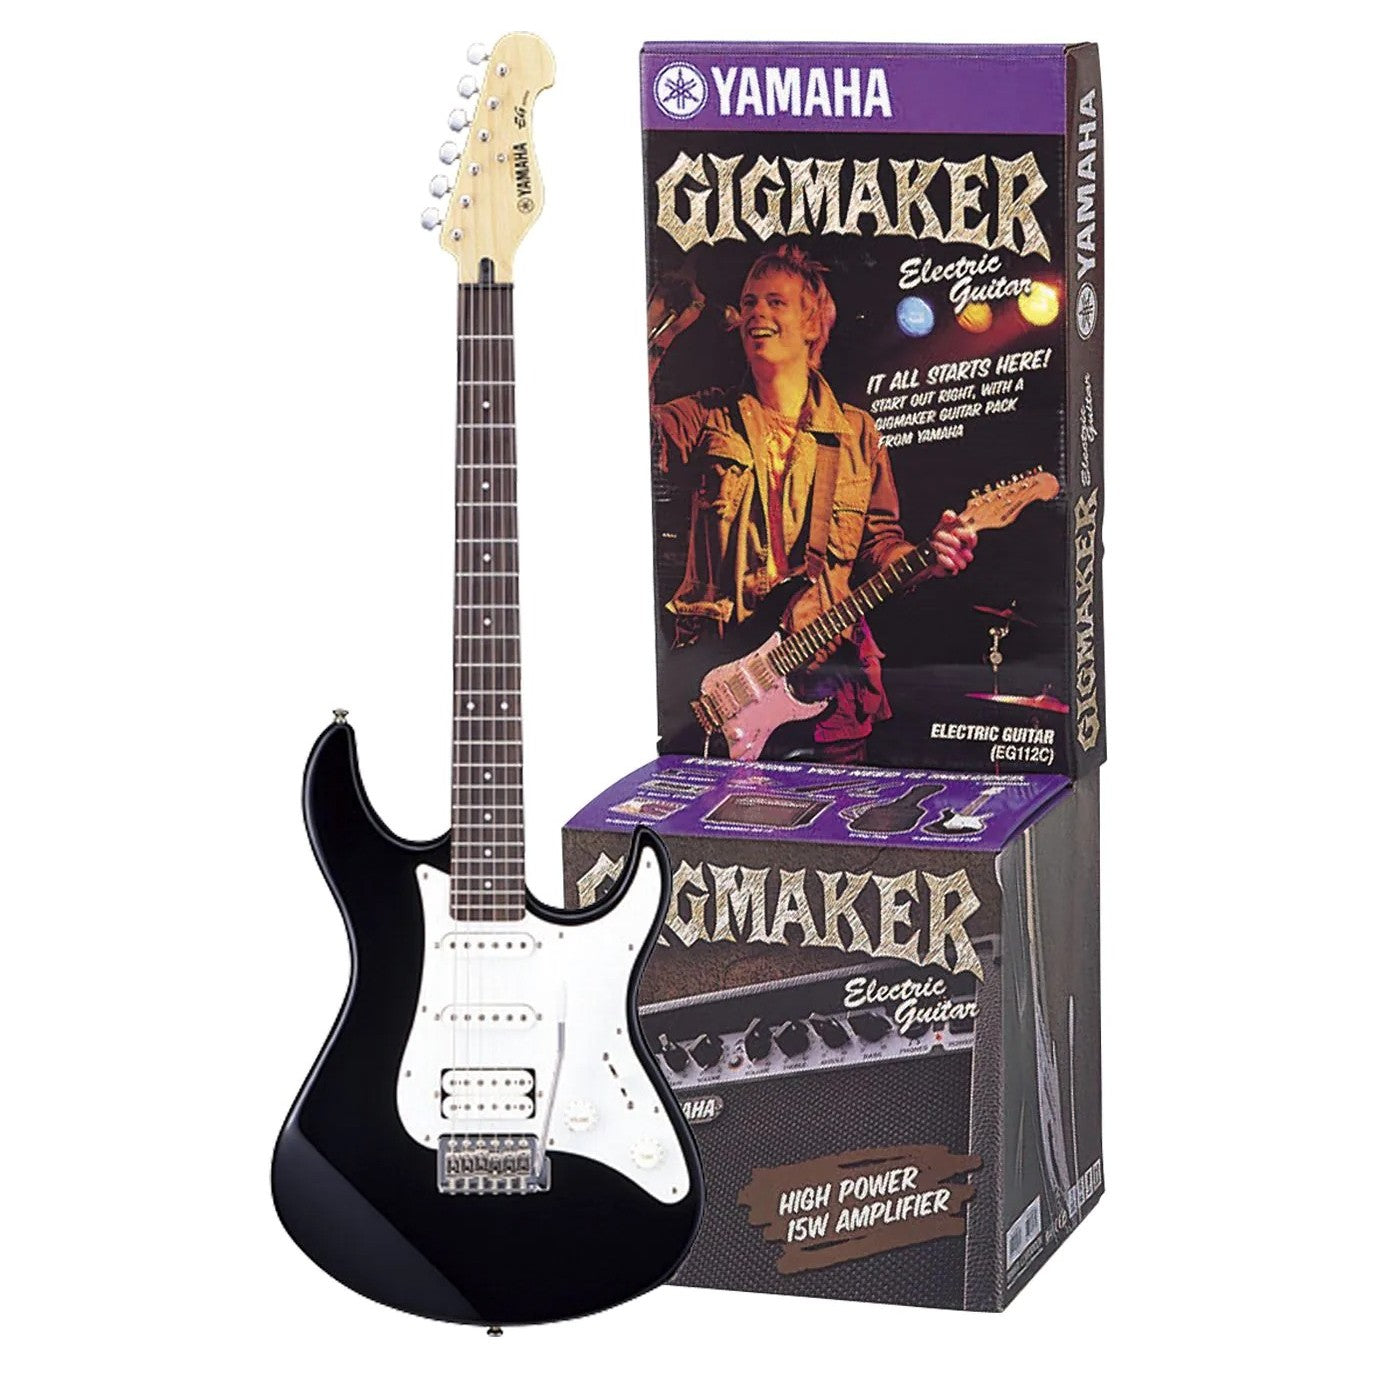 Guitar Điện Yamaha Gigmaker Series